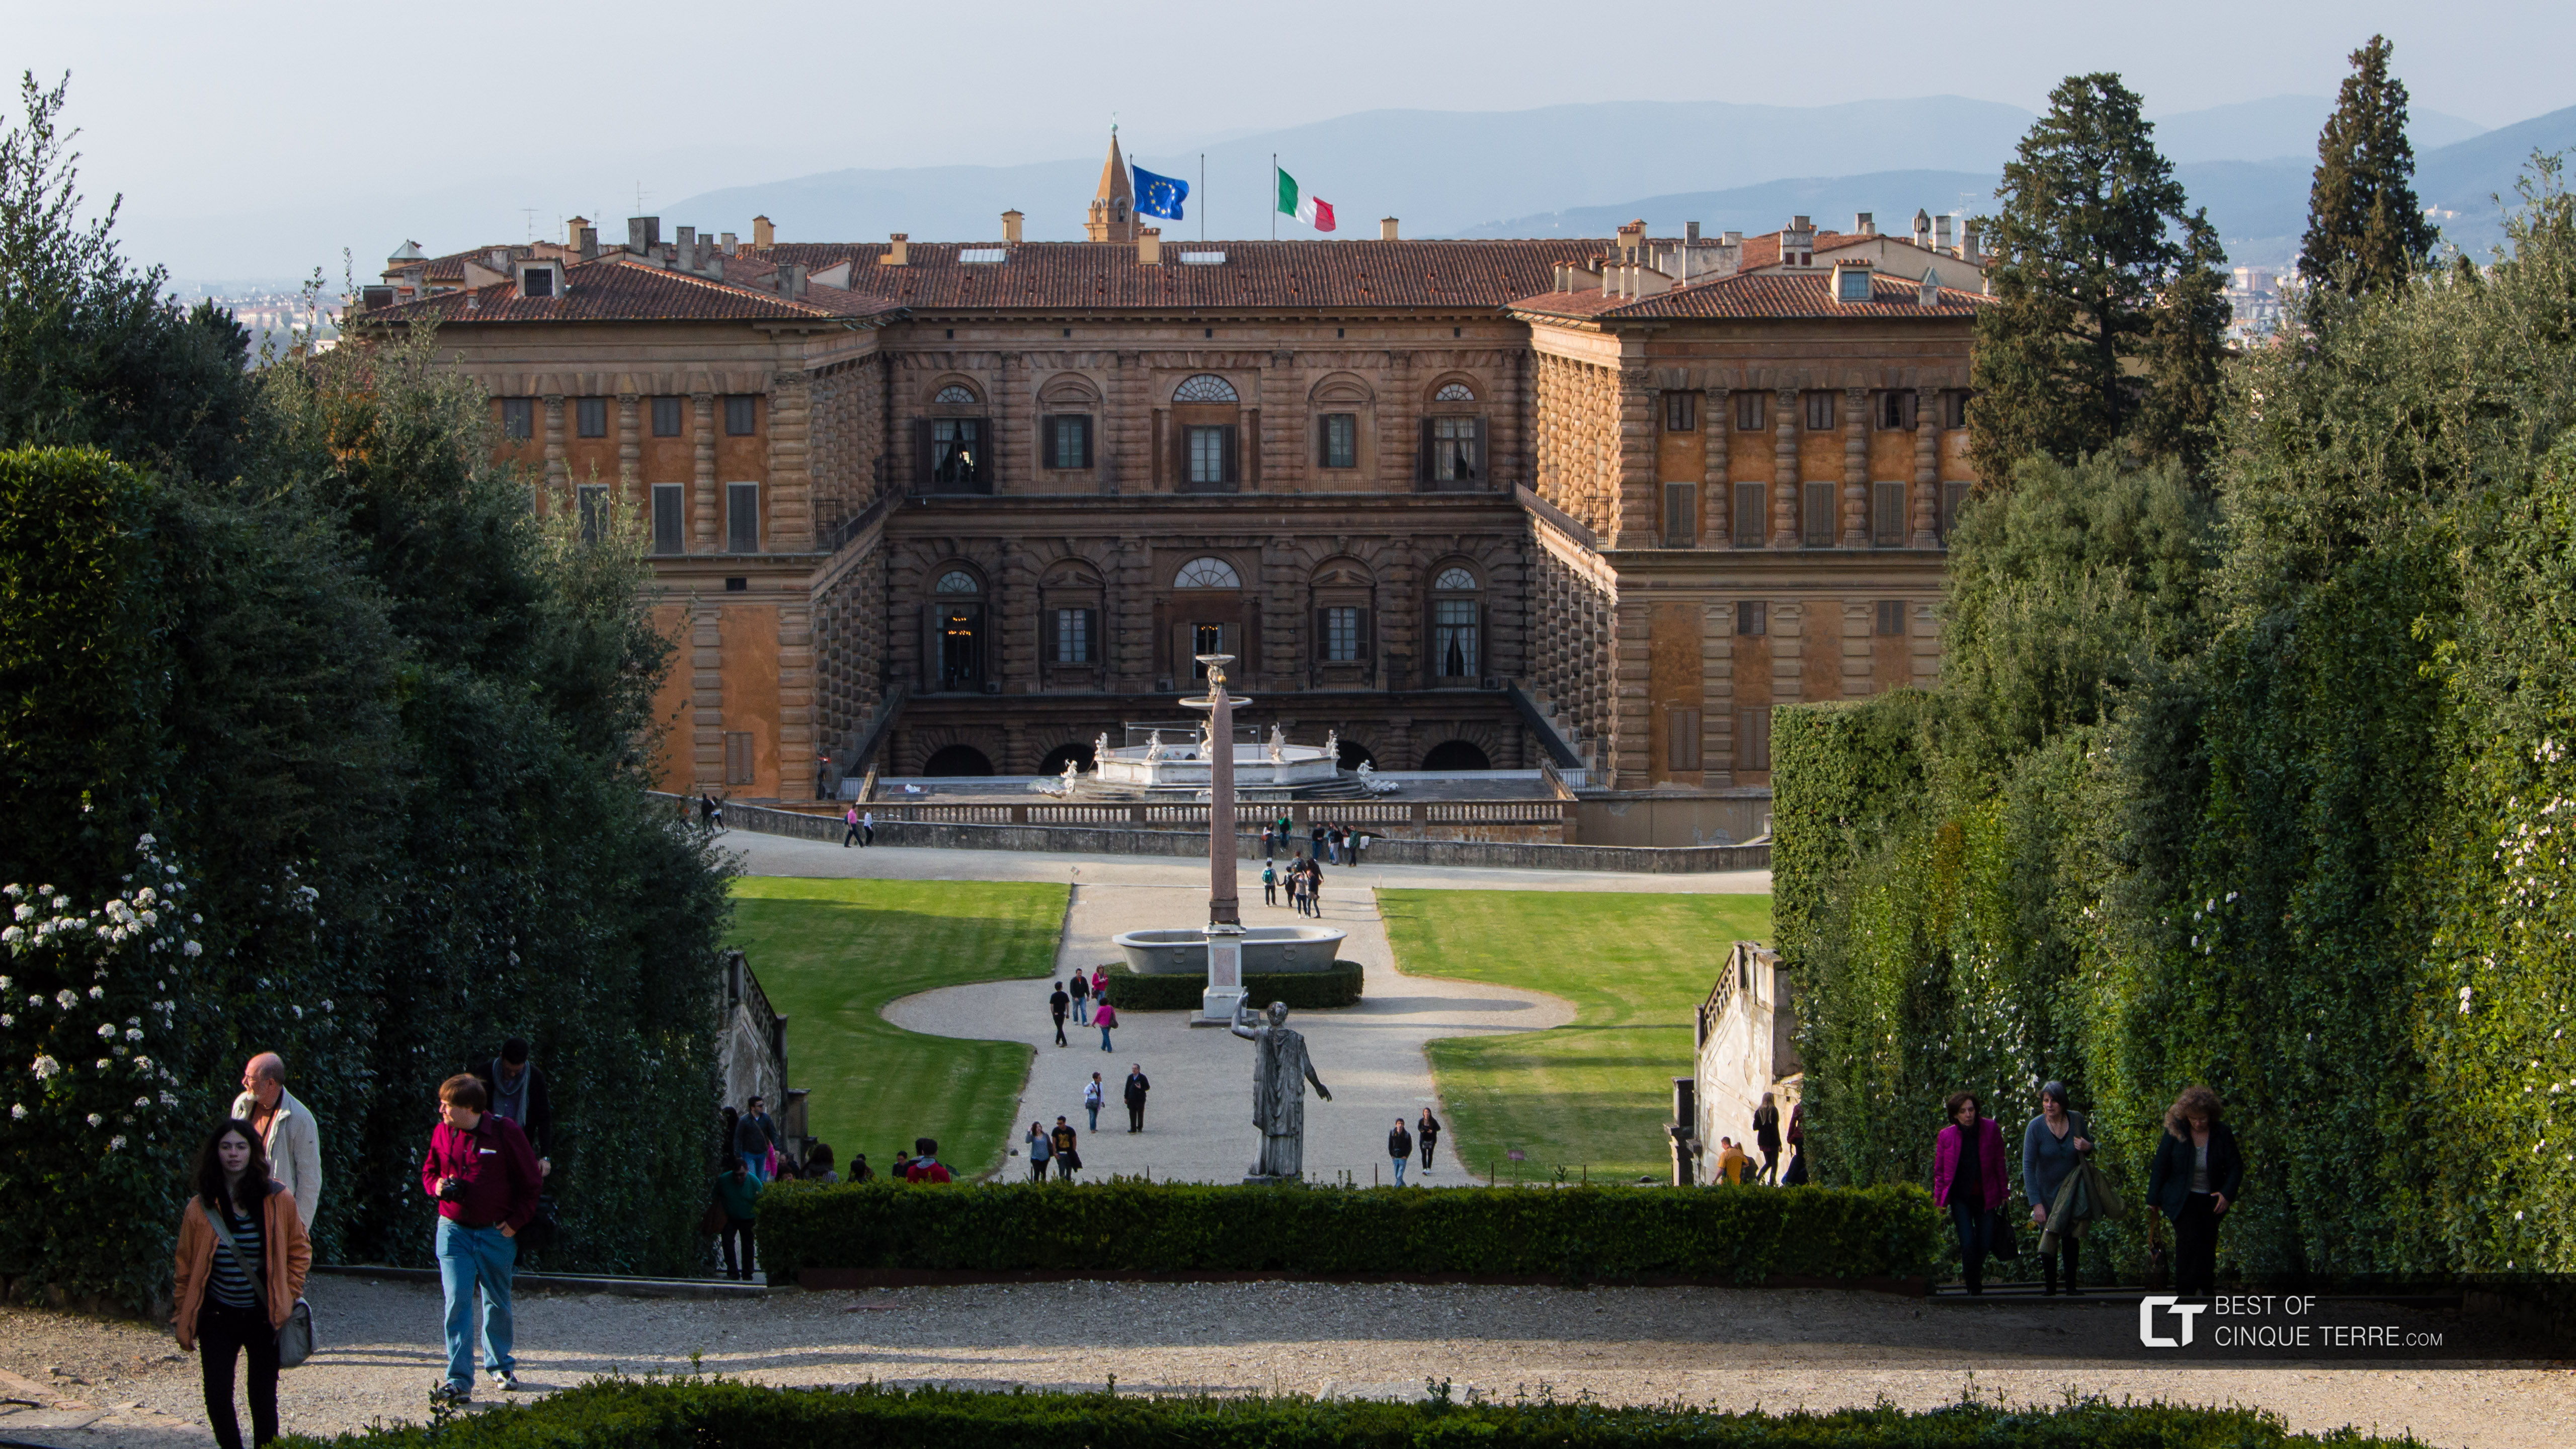 The Boboli Gardens and Pitti Palace, Florence, Italy